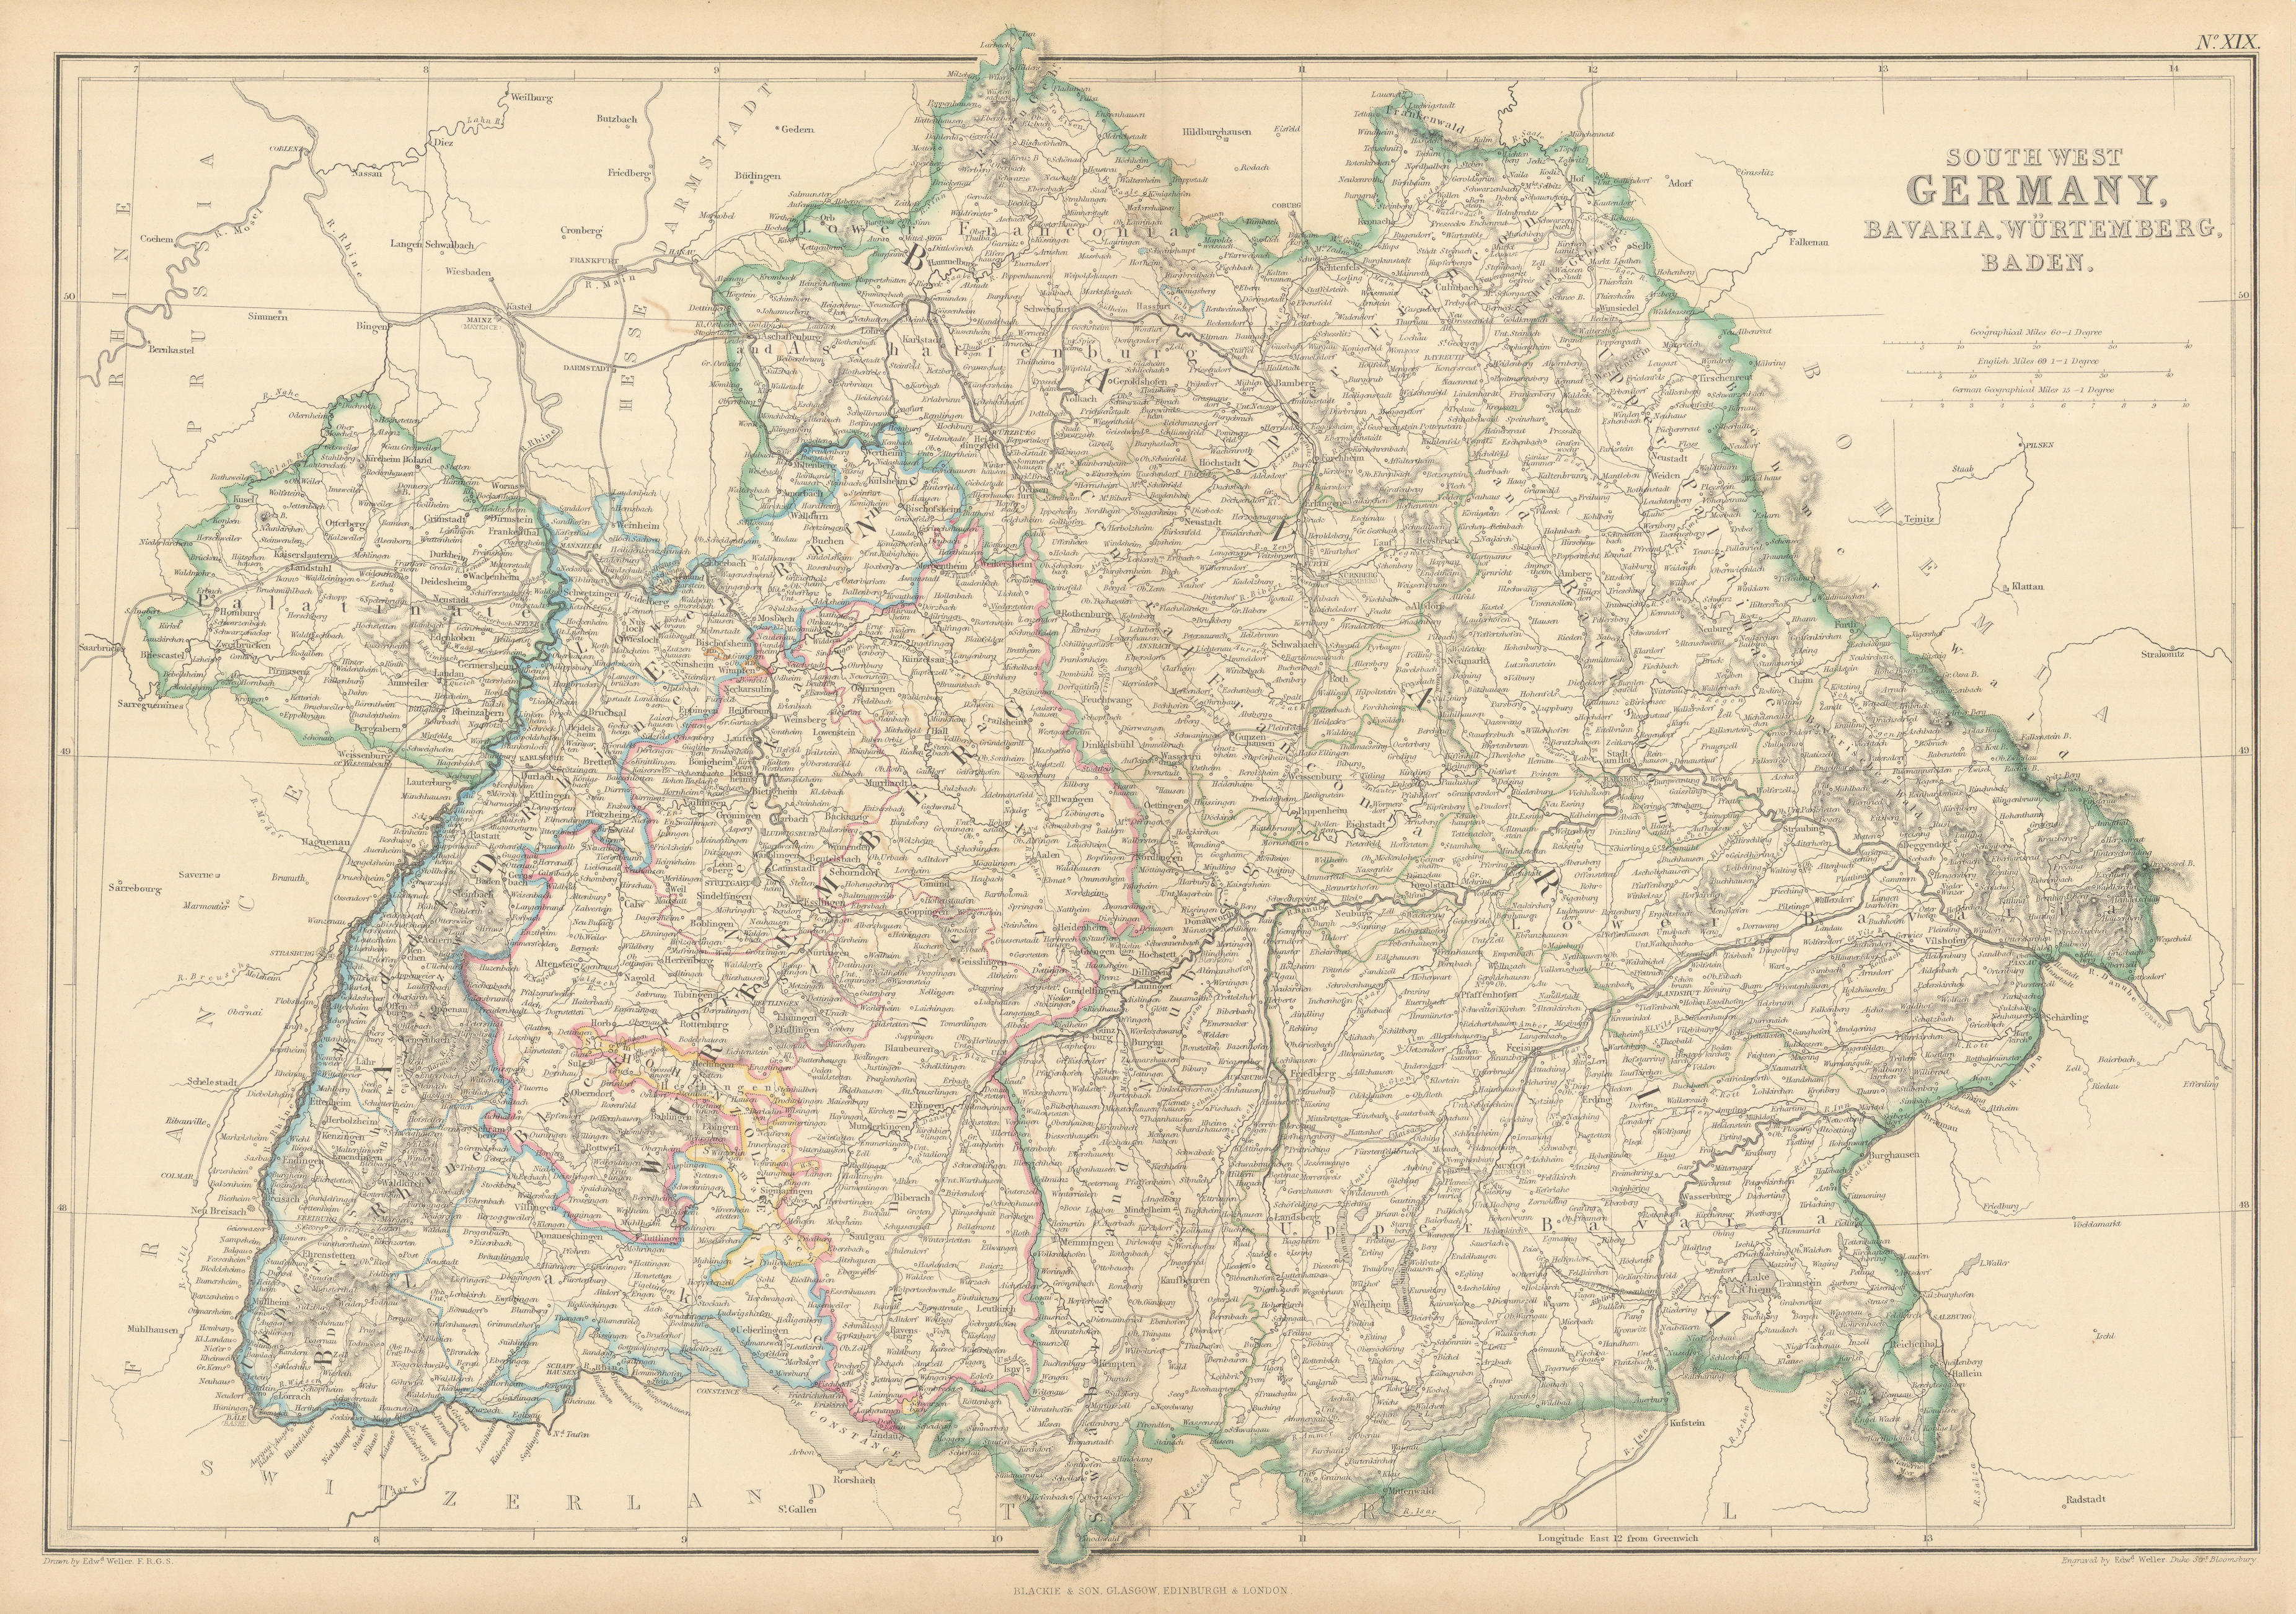 Associate Product South-West Germany, Bavaria, Würtemberg & Baden. Bayern. WELLER 1859 old map